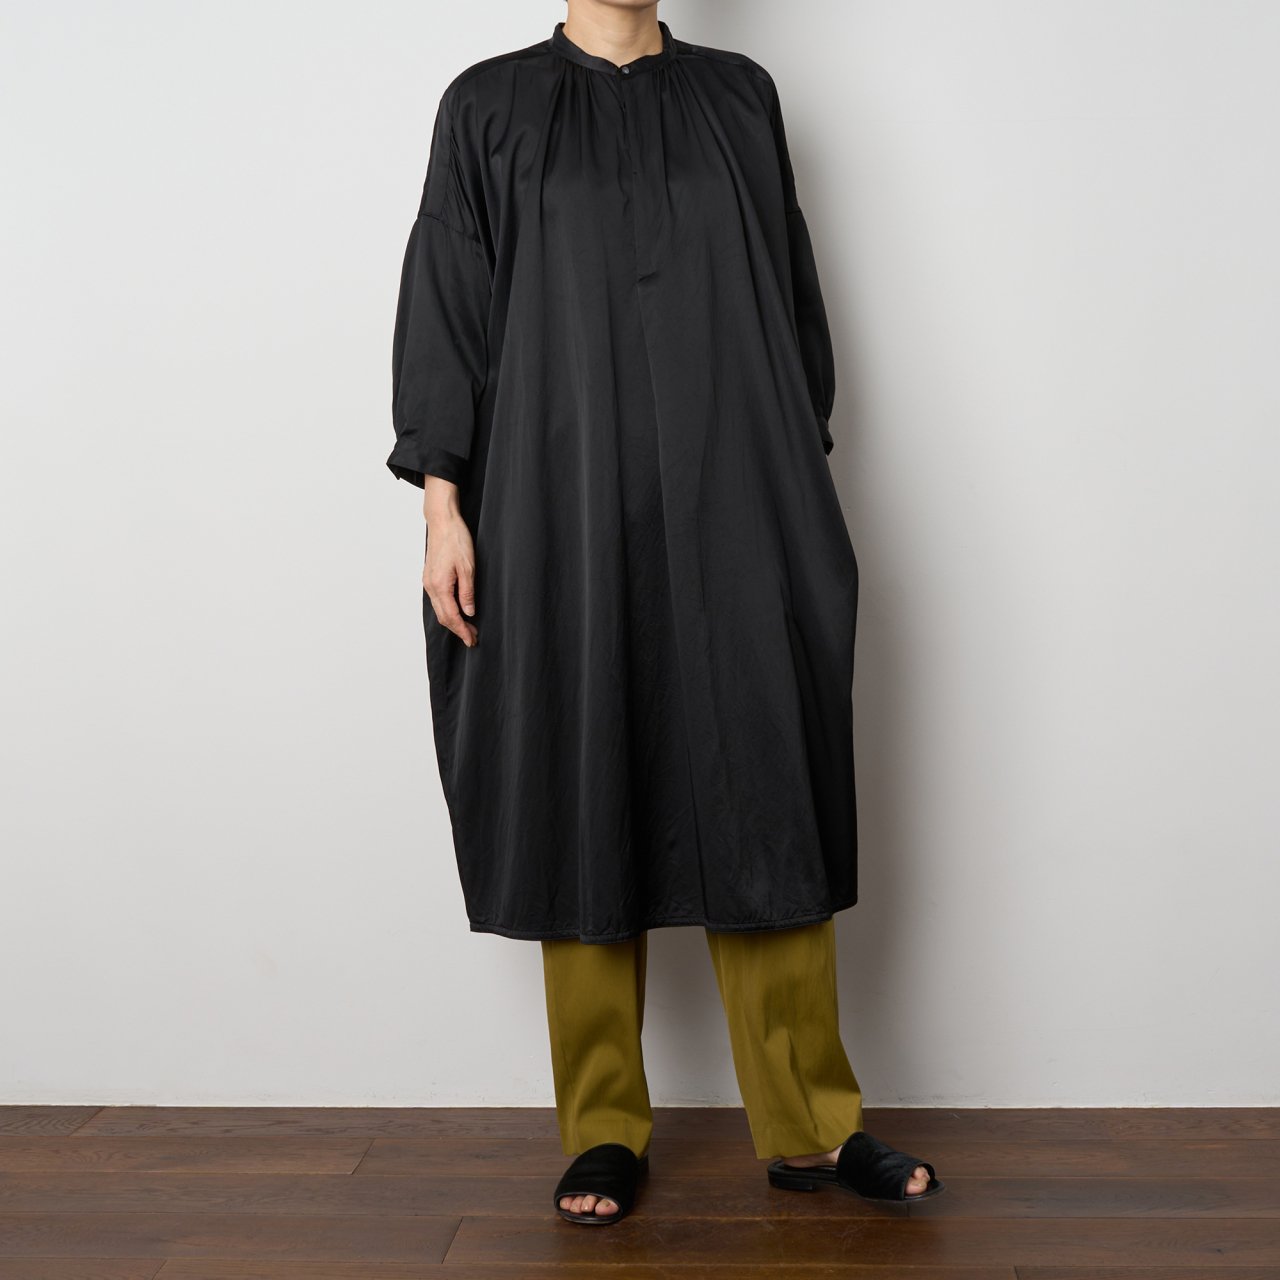 suzuki takayukislip-on dress Black - Pale Jute